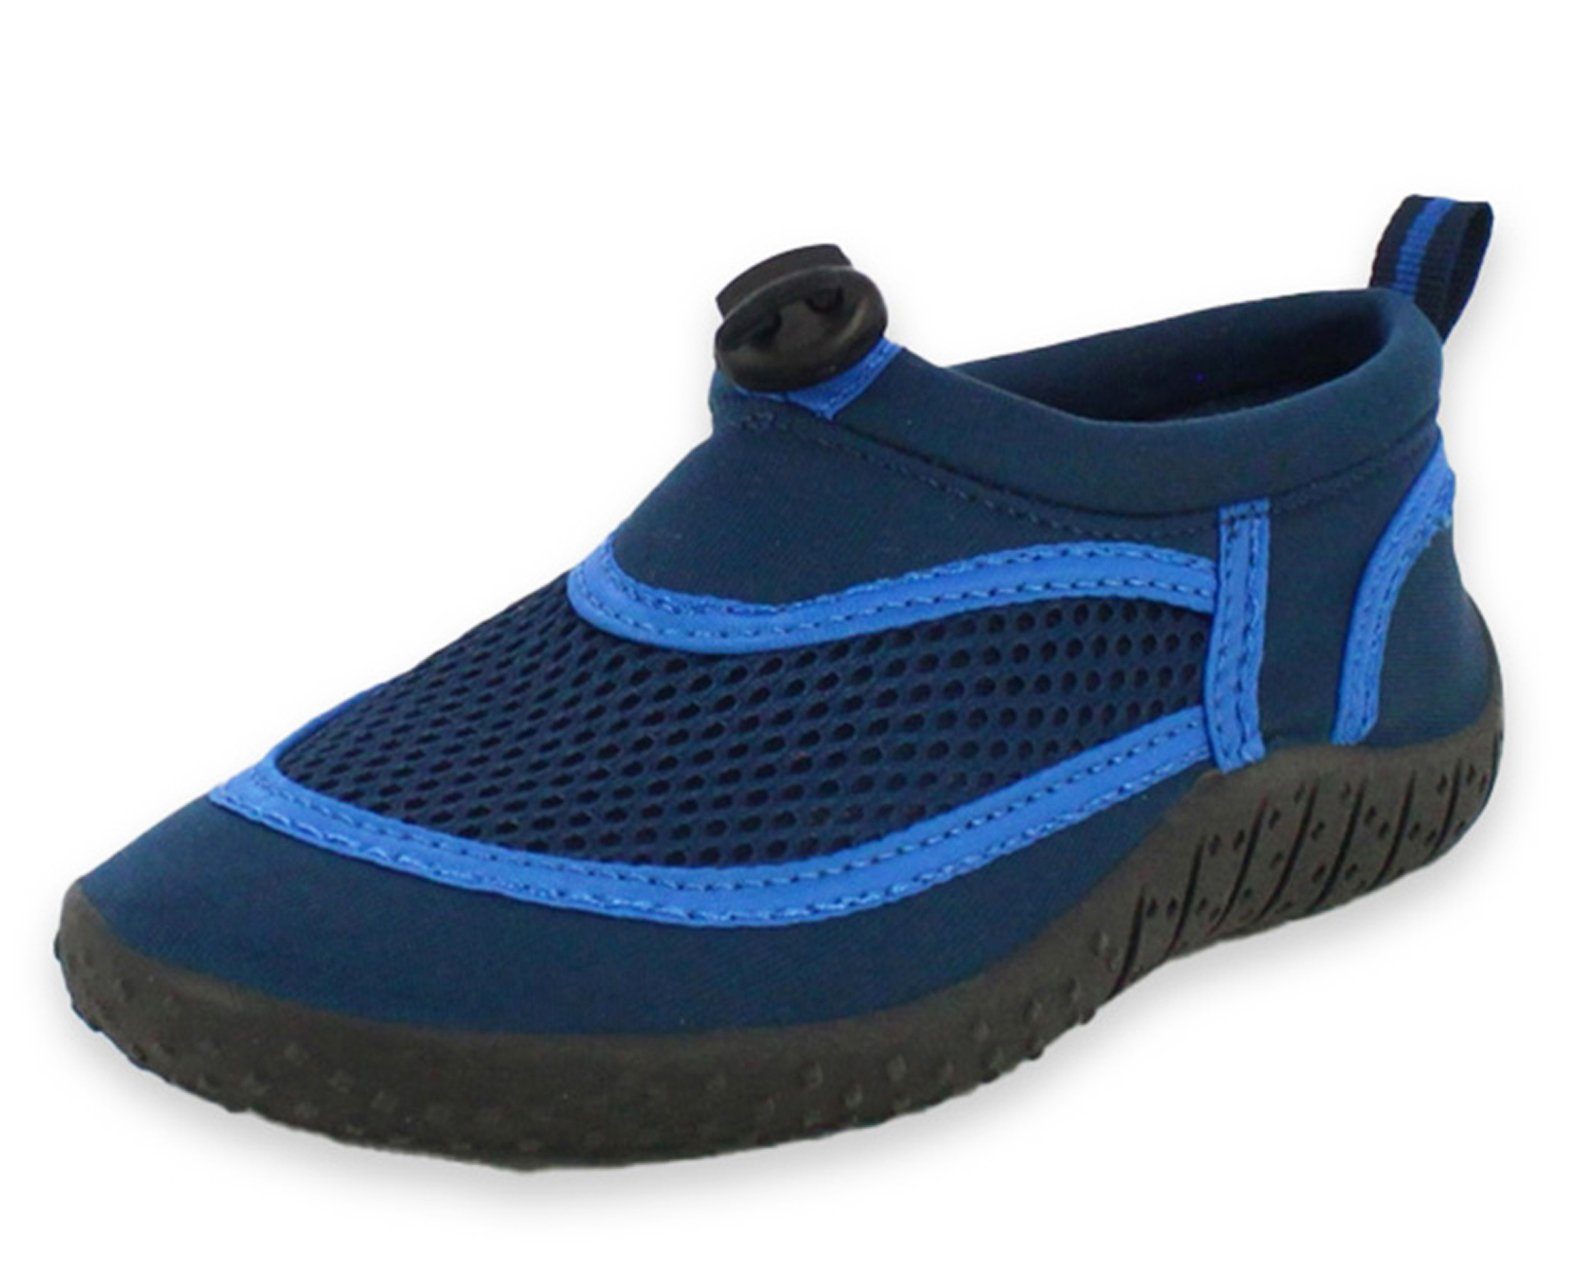 Beck Badeschuh Aqua Badeschuh Füße (leichte, stabile flexible, schnelltrocknend dunkelblau Laufsohle, Strand) Pool rutschfeste geschützte an flexible Schuhe, und für